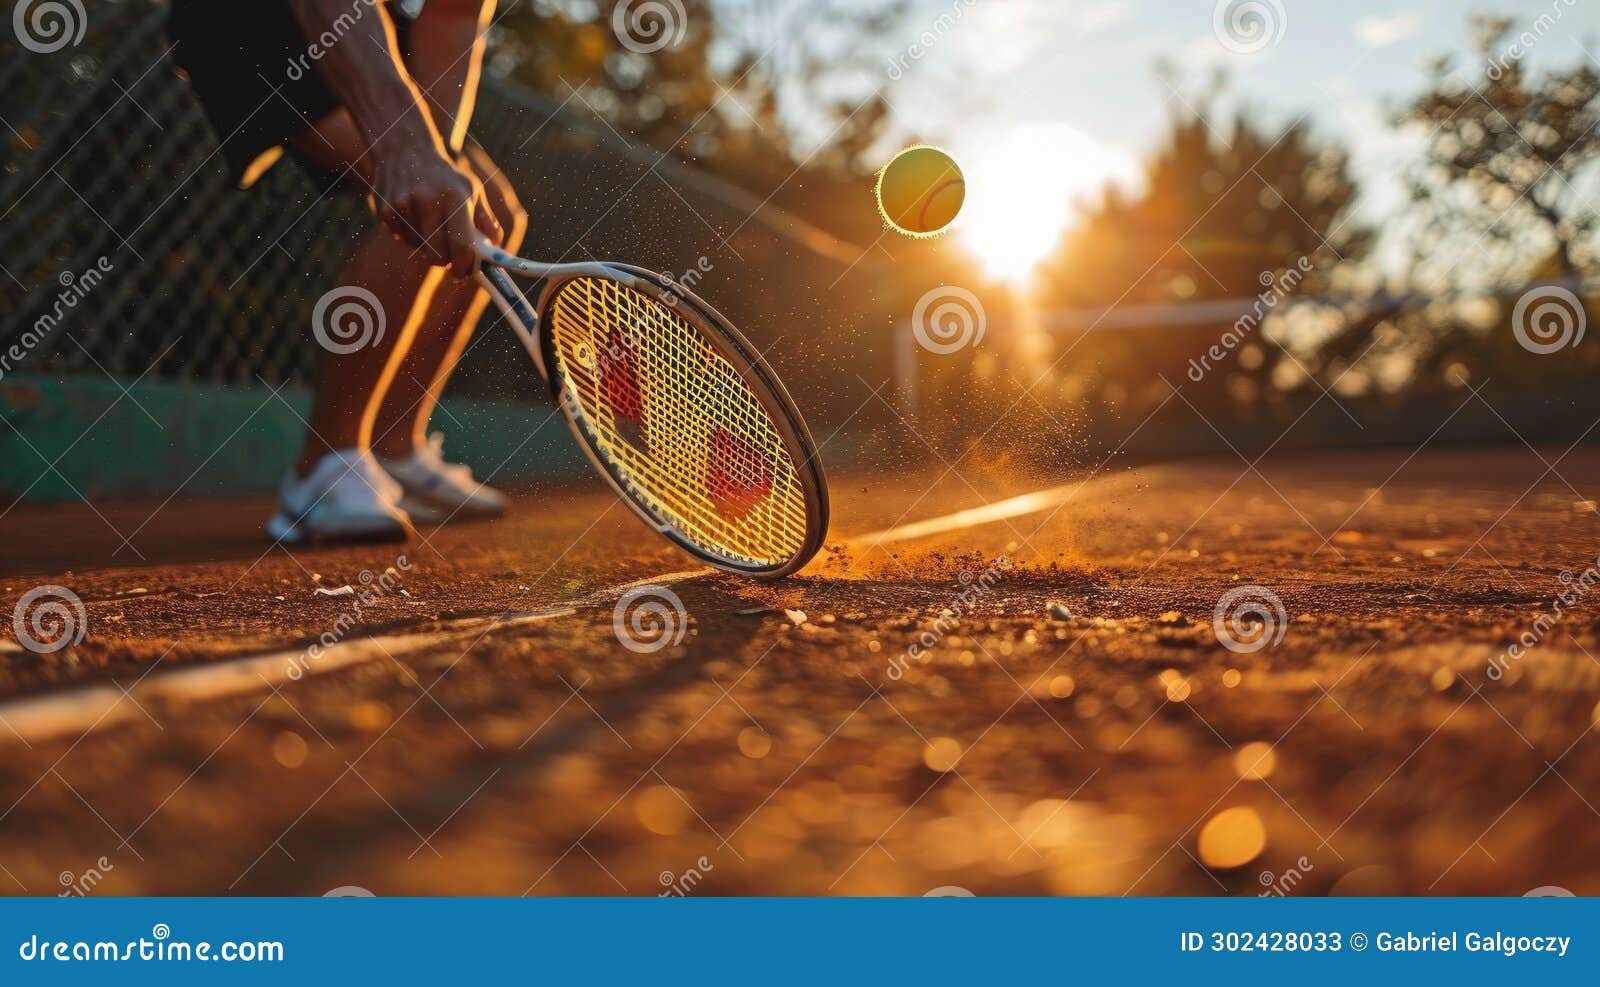 close up of hand with tennis racket and tennisball on green summer grass field